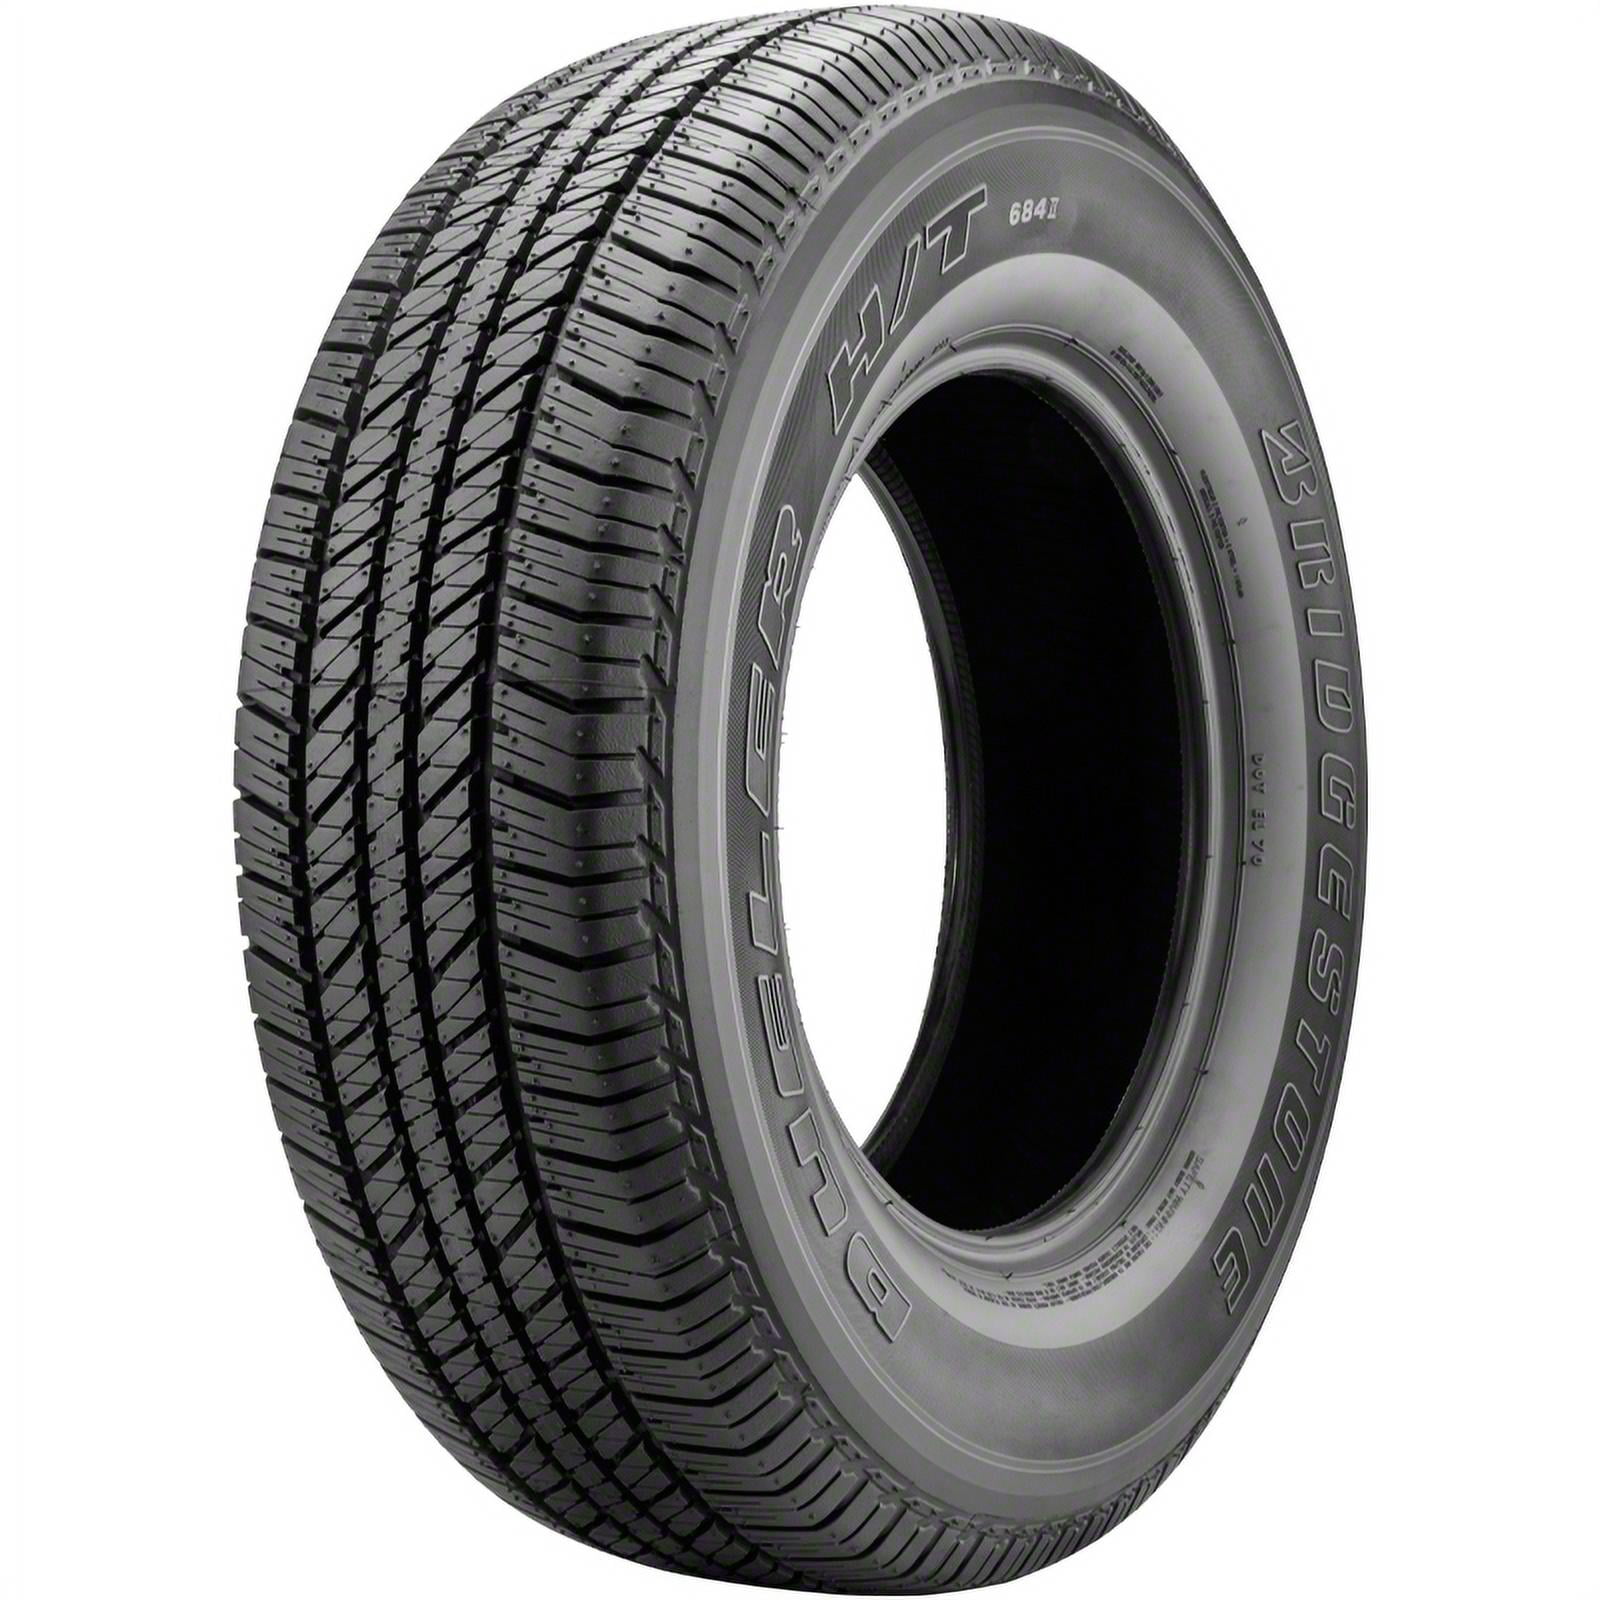 Bridgestone P255/70R18 70T Tire